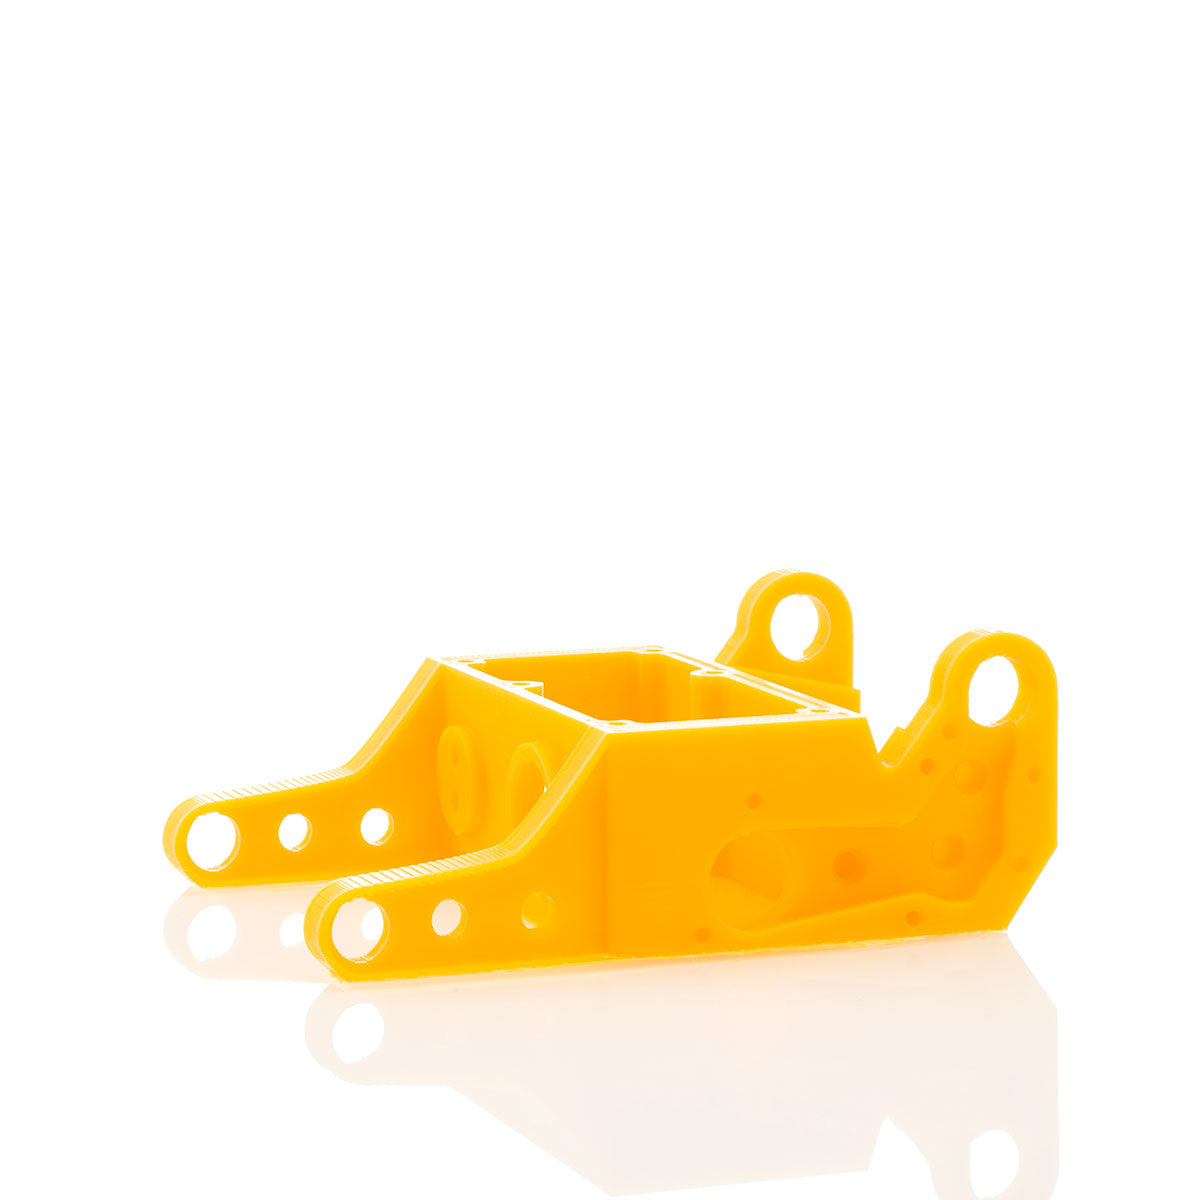 Ultimaker Tough PLA Filament - 2.85mm (750g) - Yellow